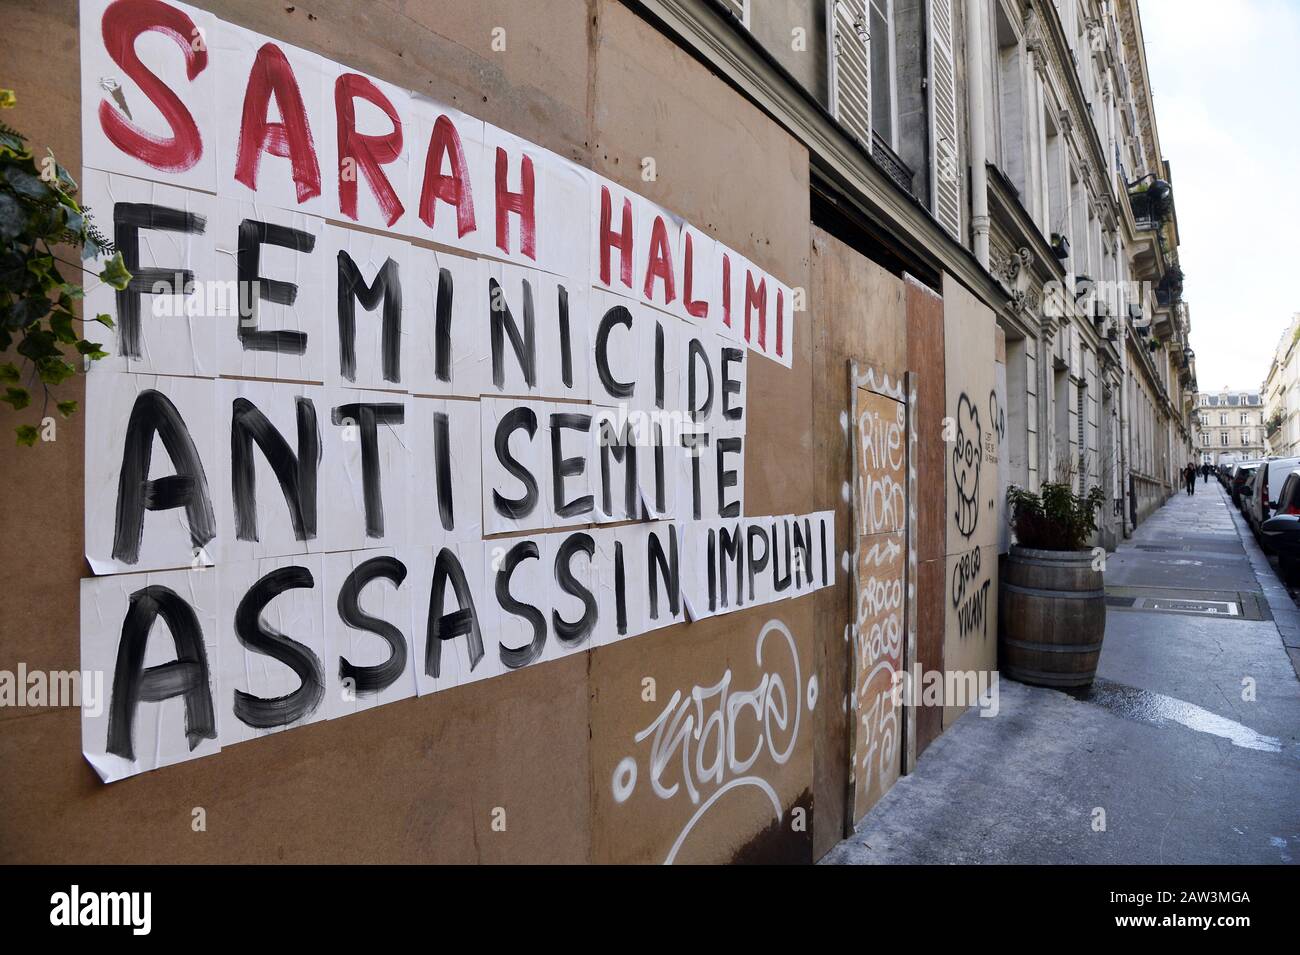 Sarah Halimi antisemitic crime - Paris - France Stock Photo